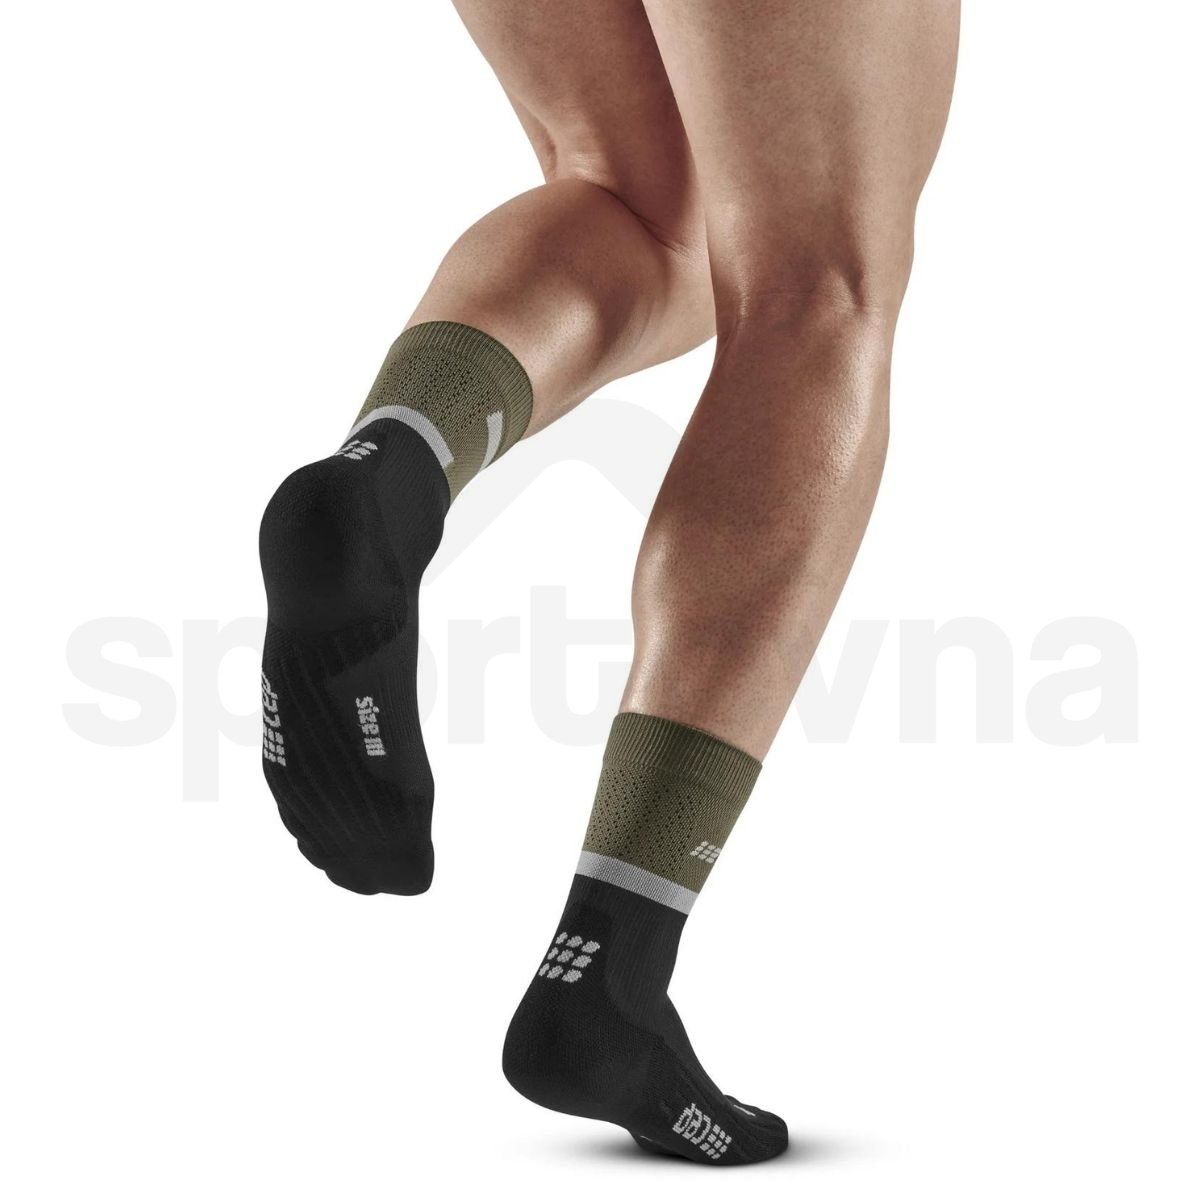 Ponožky CEP 4.0 M - zelená